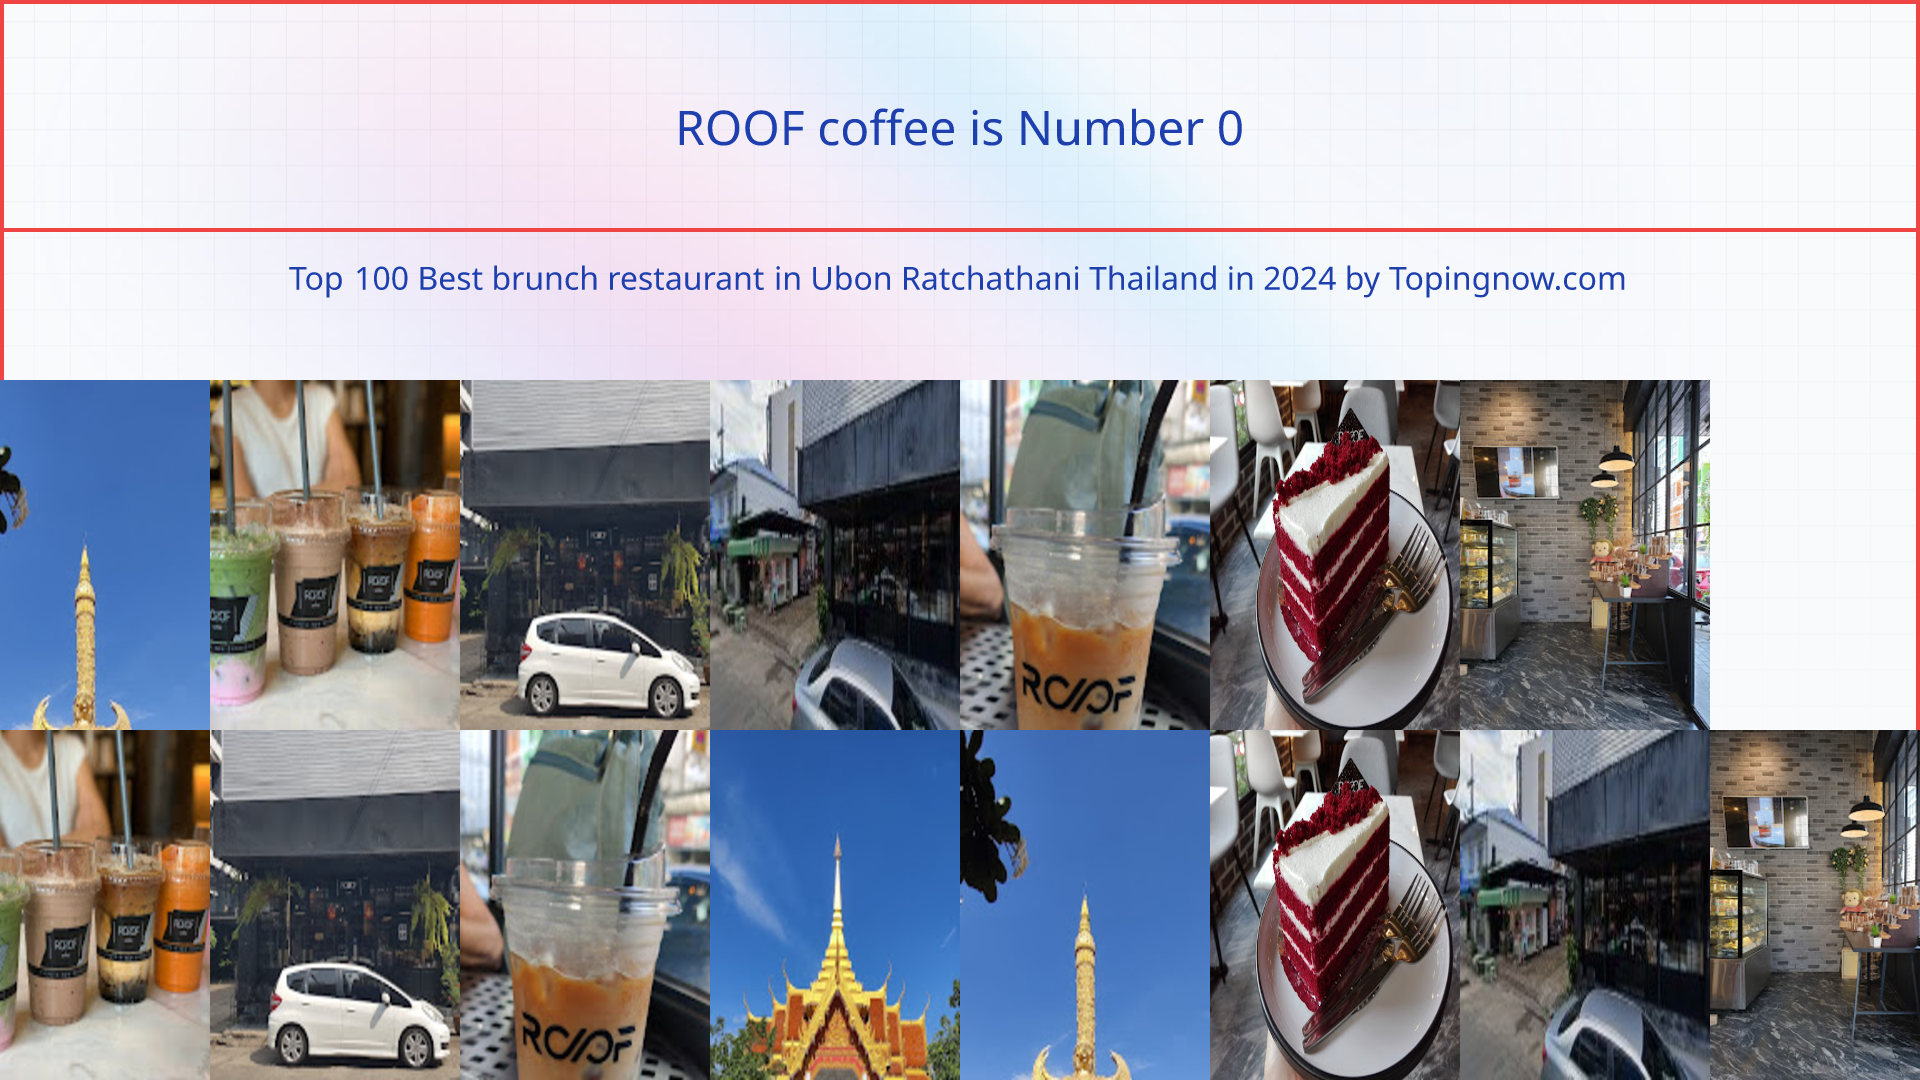 ROOF coffee: Top 100 Best brunch restaurant in Ubon Ratchathani Thailand in 2024